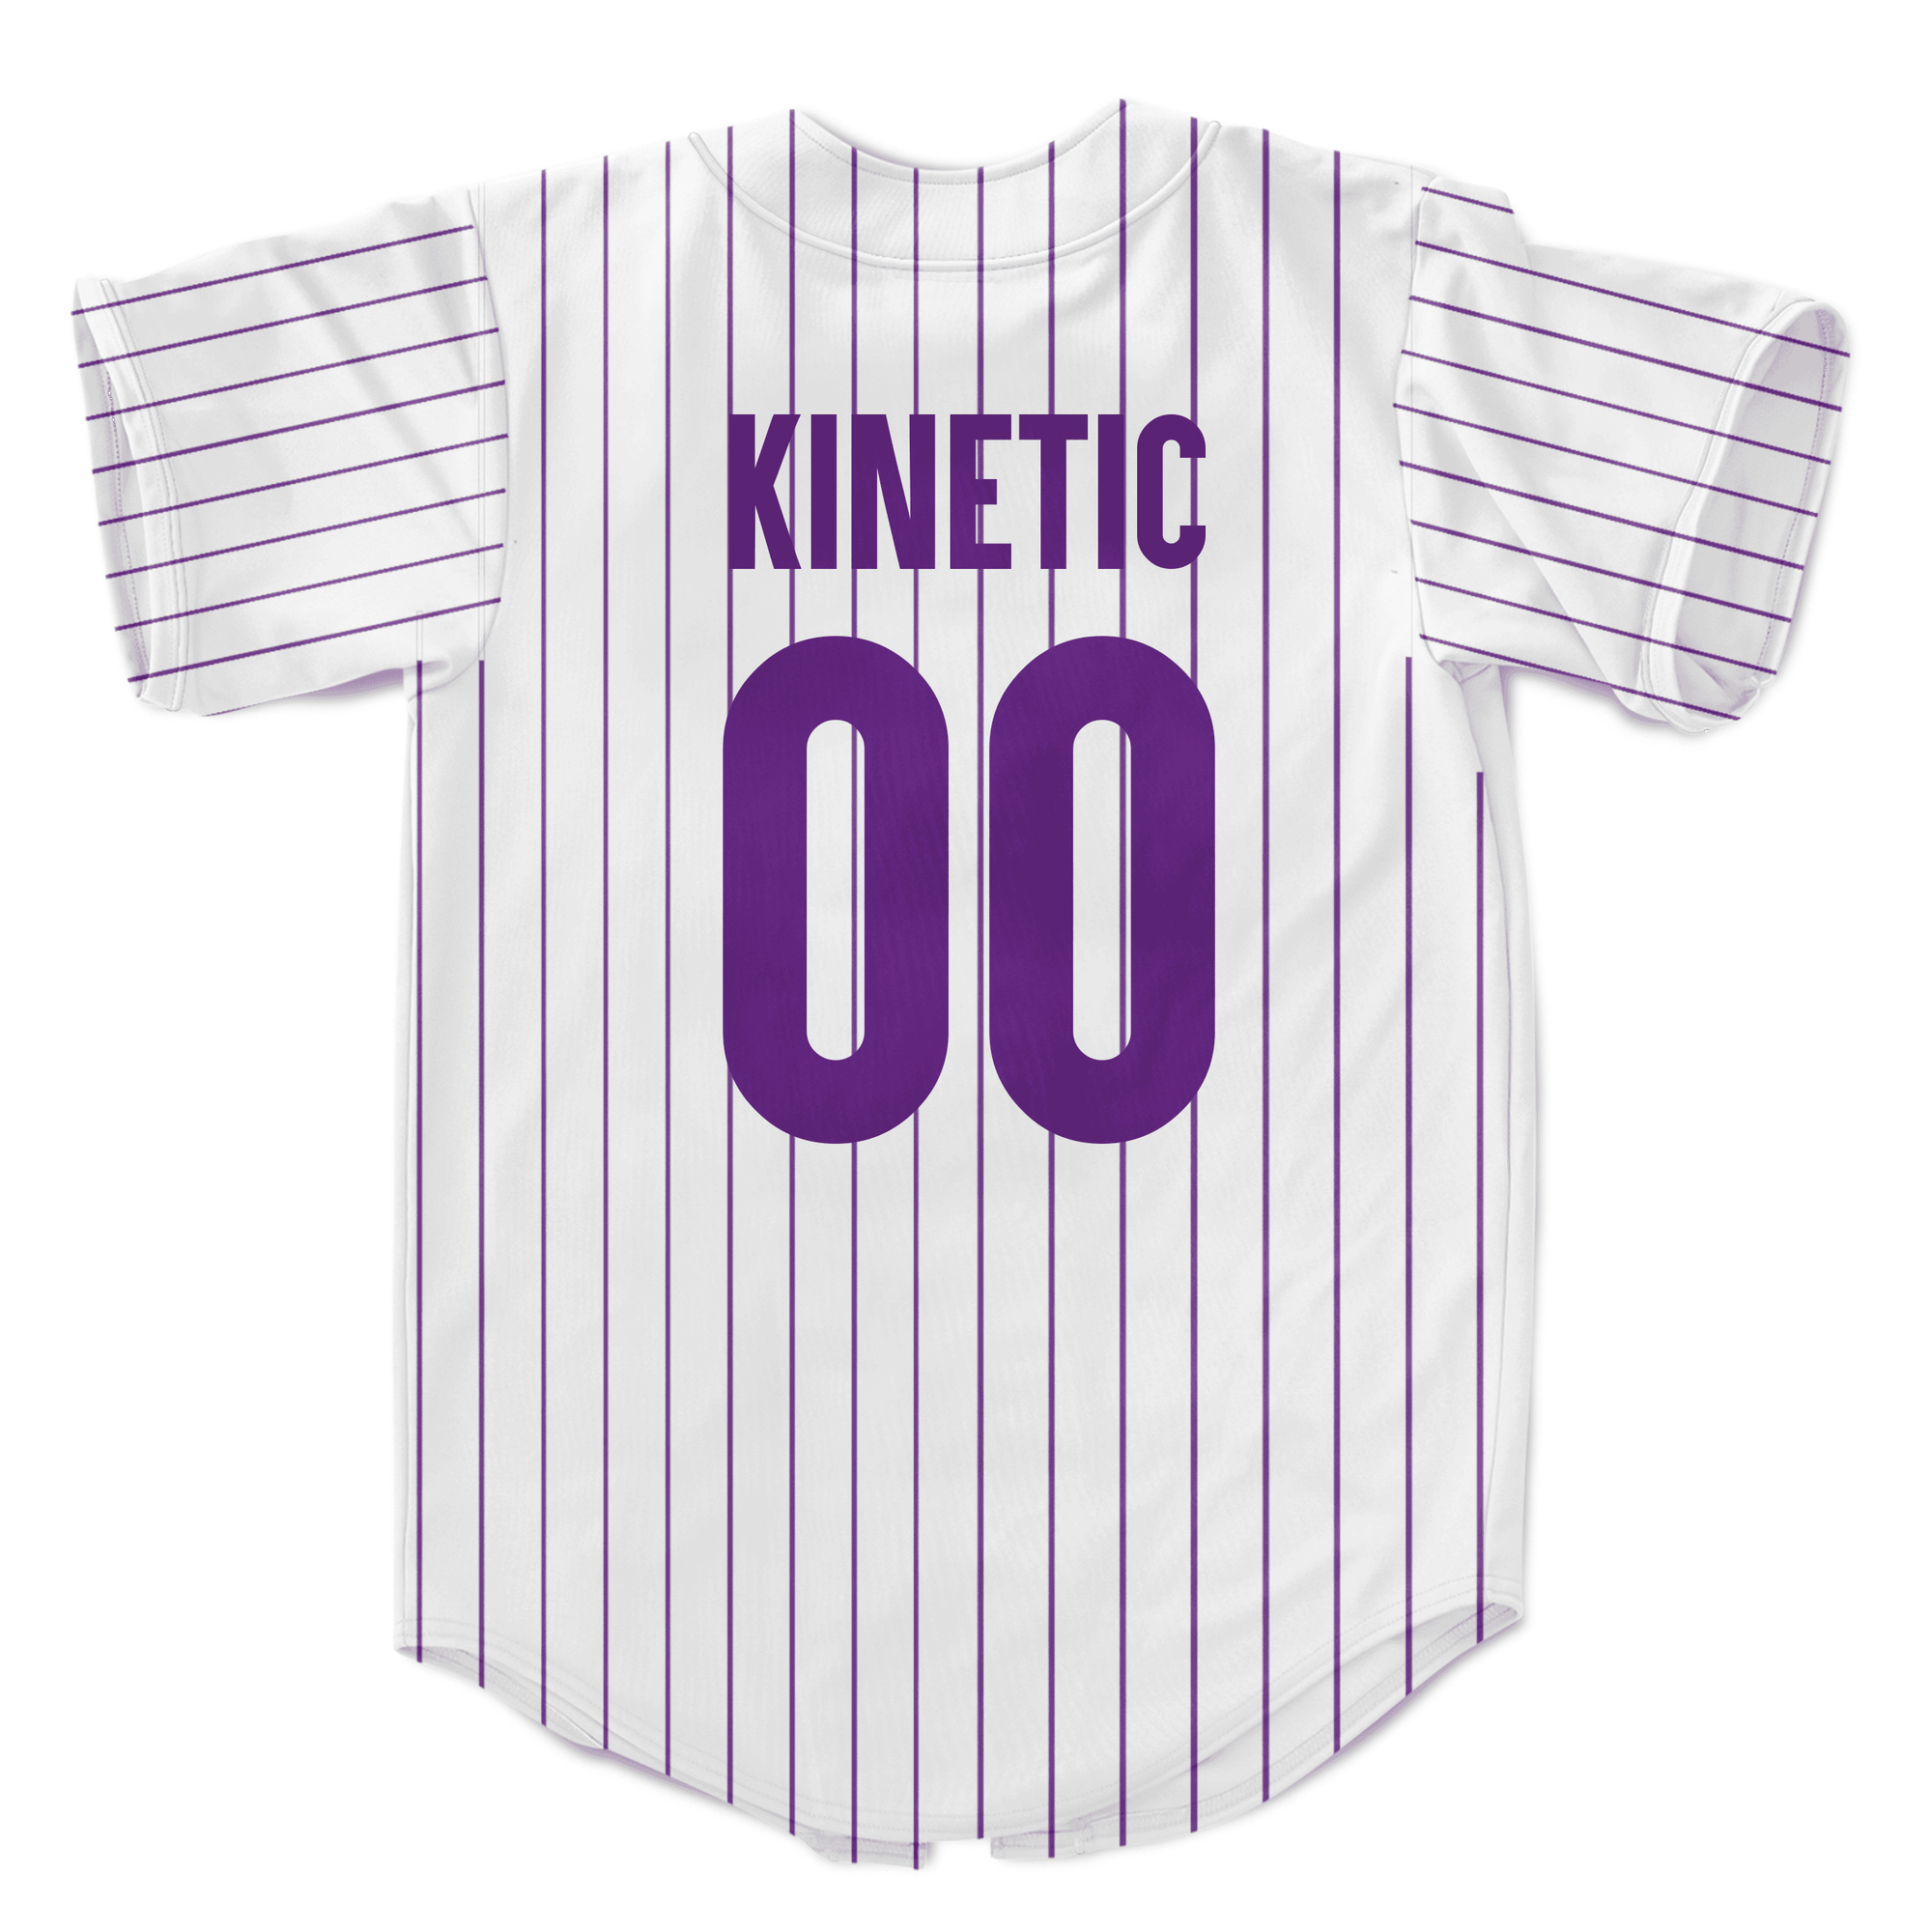 Delta Chi - Purple Pinstipe - Baseball Jersey